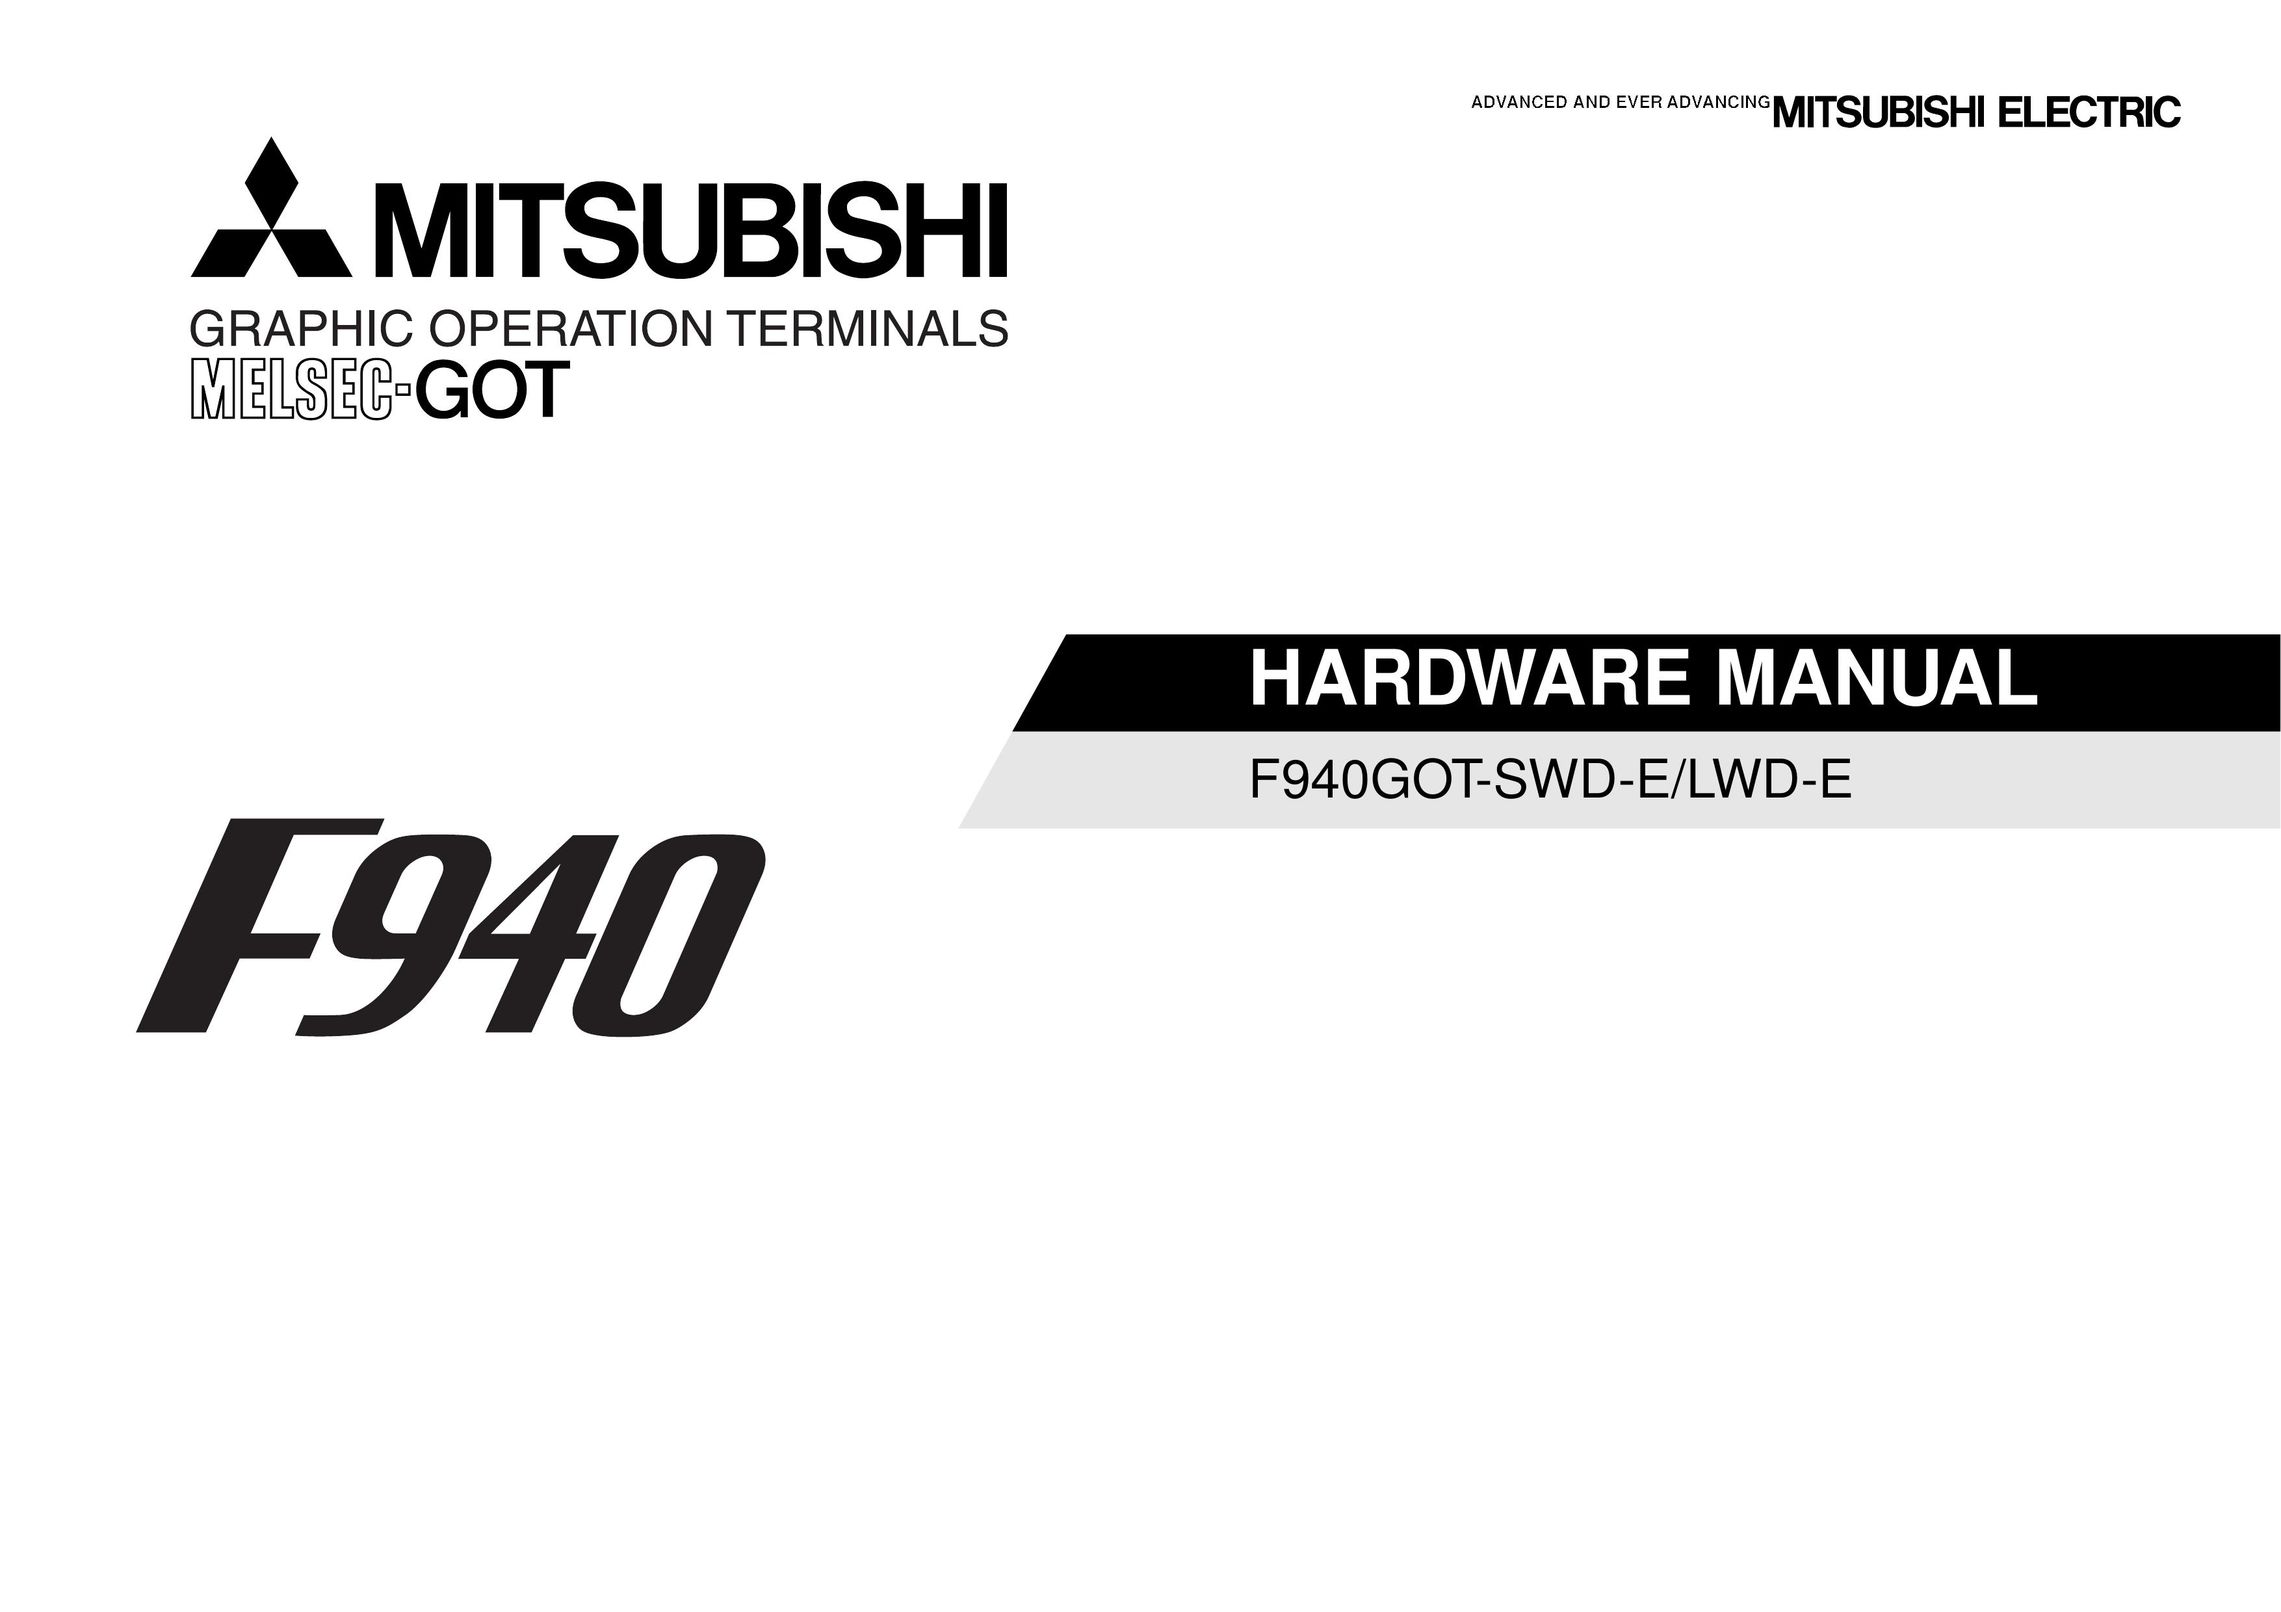 Mitsubishi Electronics F940 Computer Hardware User Manual